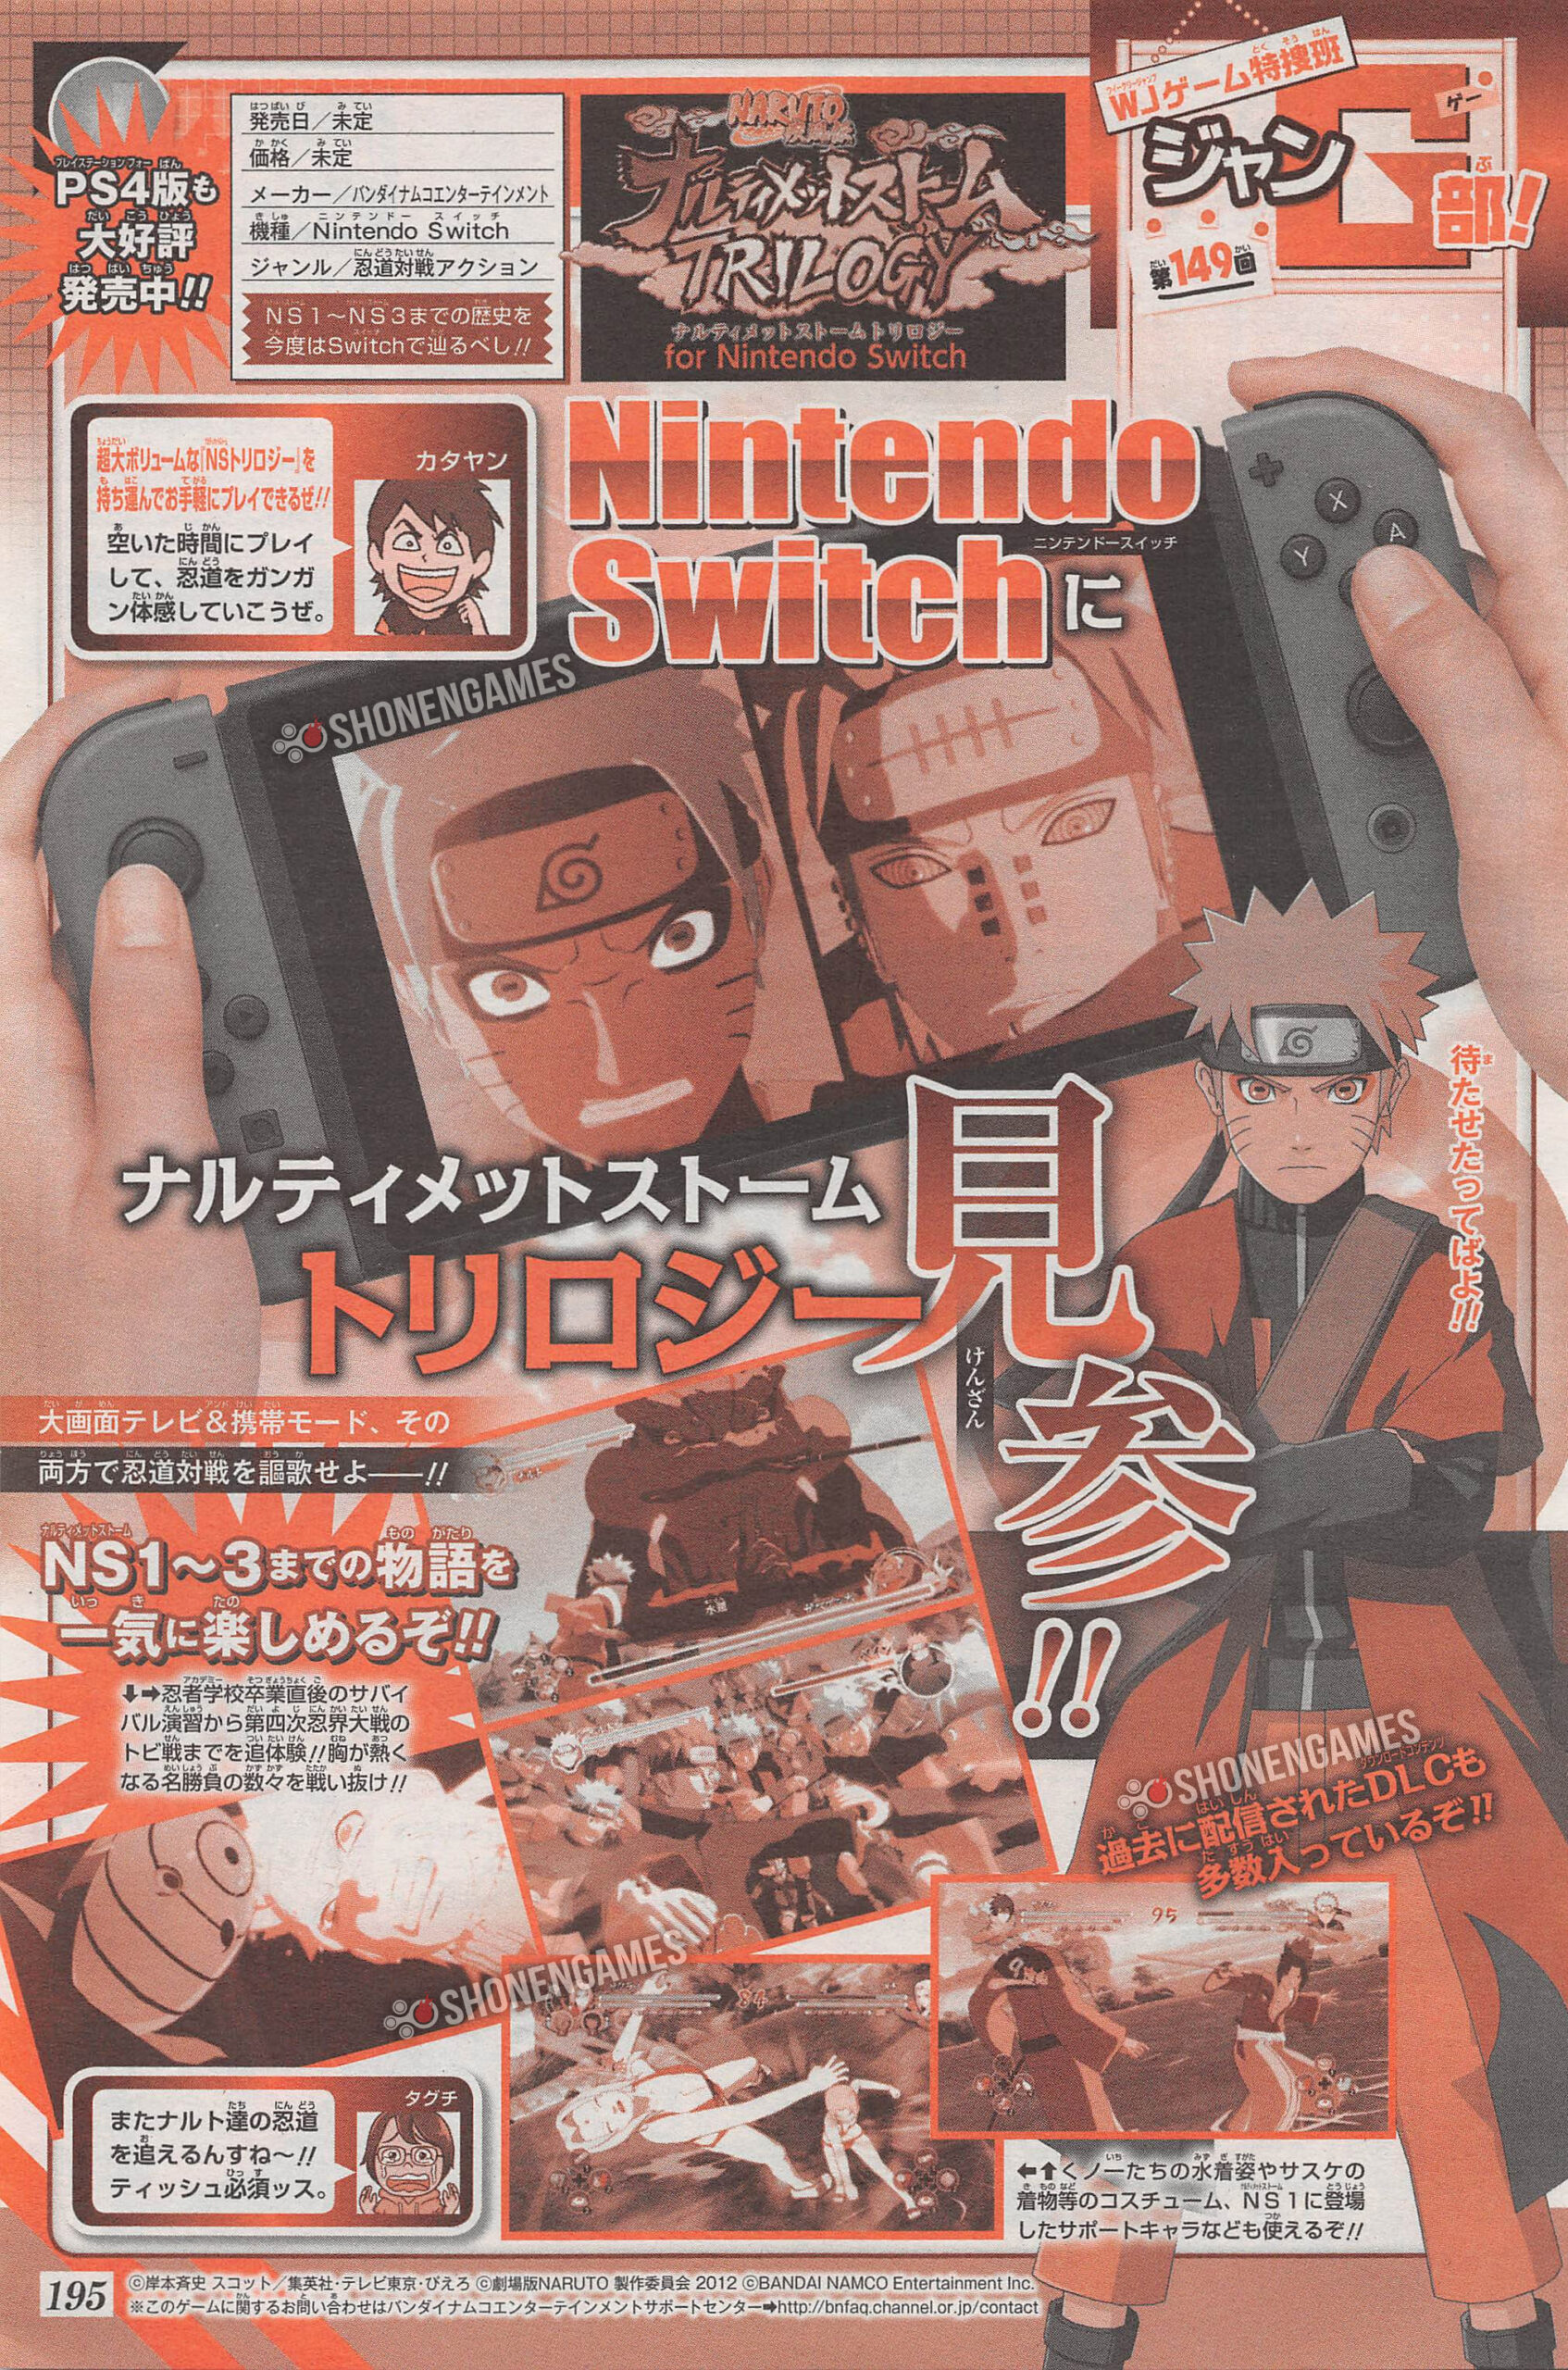 Gematsu [Update] Ninja Storm coming Shippuden: Ultimate Switch Trilogy Naruto - to